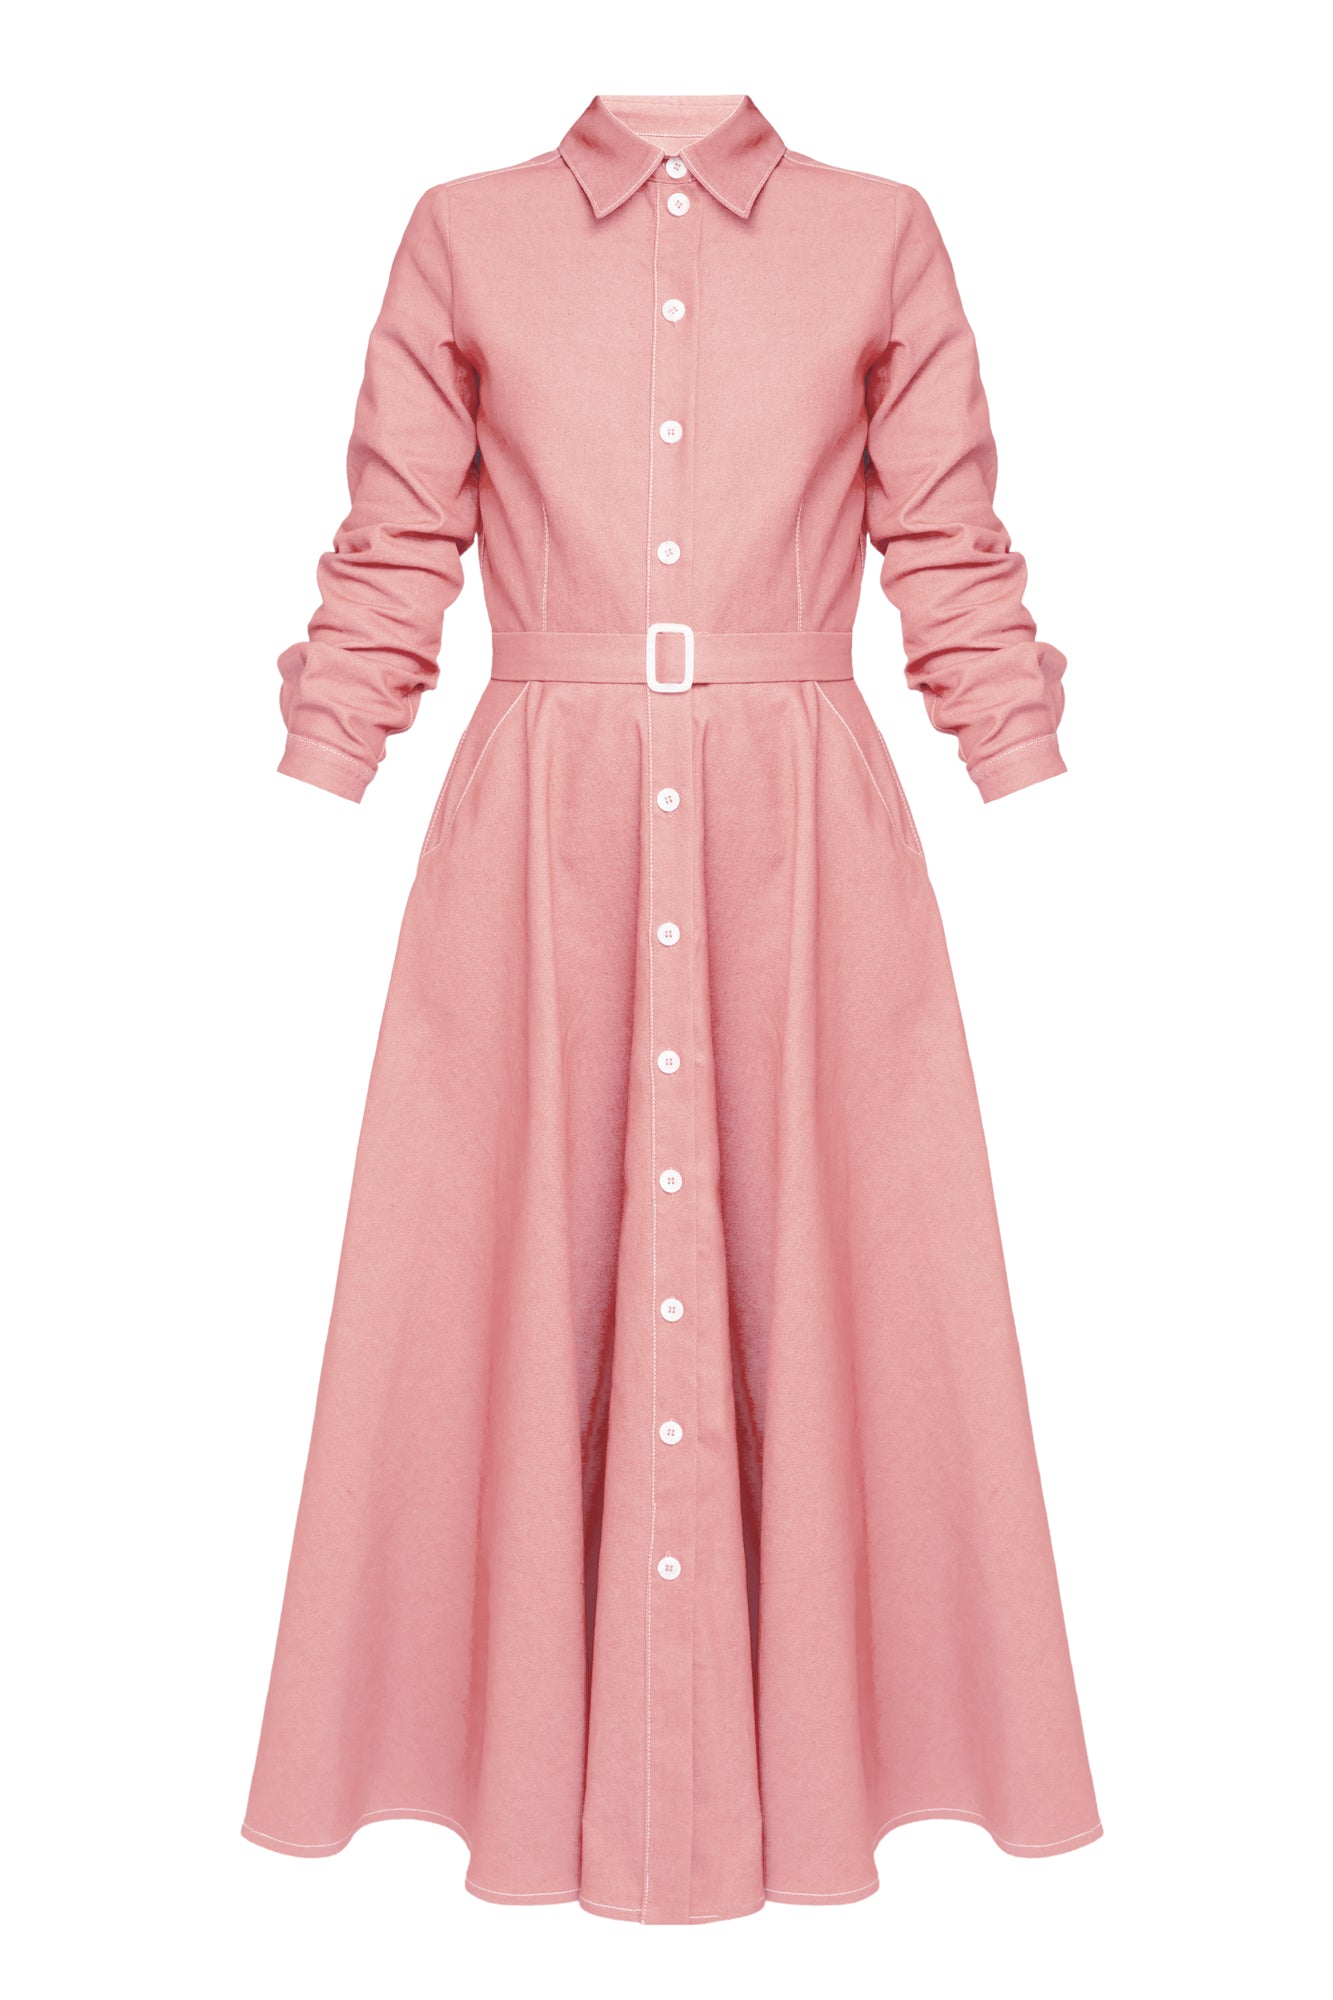 ESTI Pastel Pink Denim Midi Shirt Dress - Modern and Trendy Design